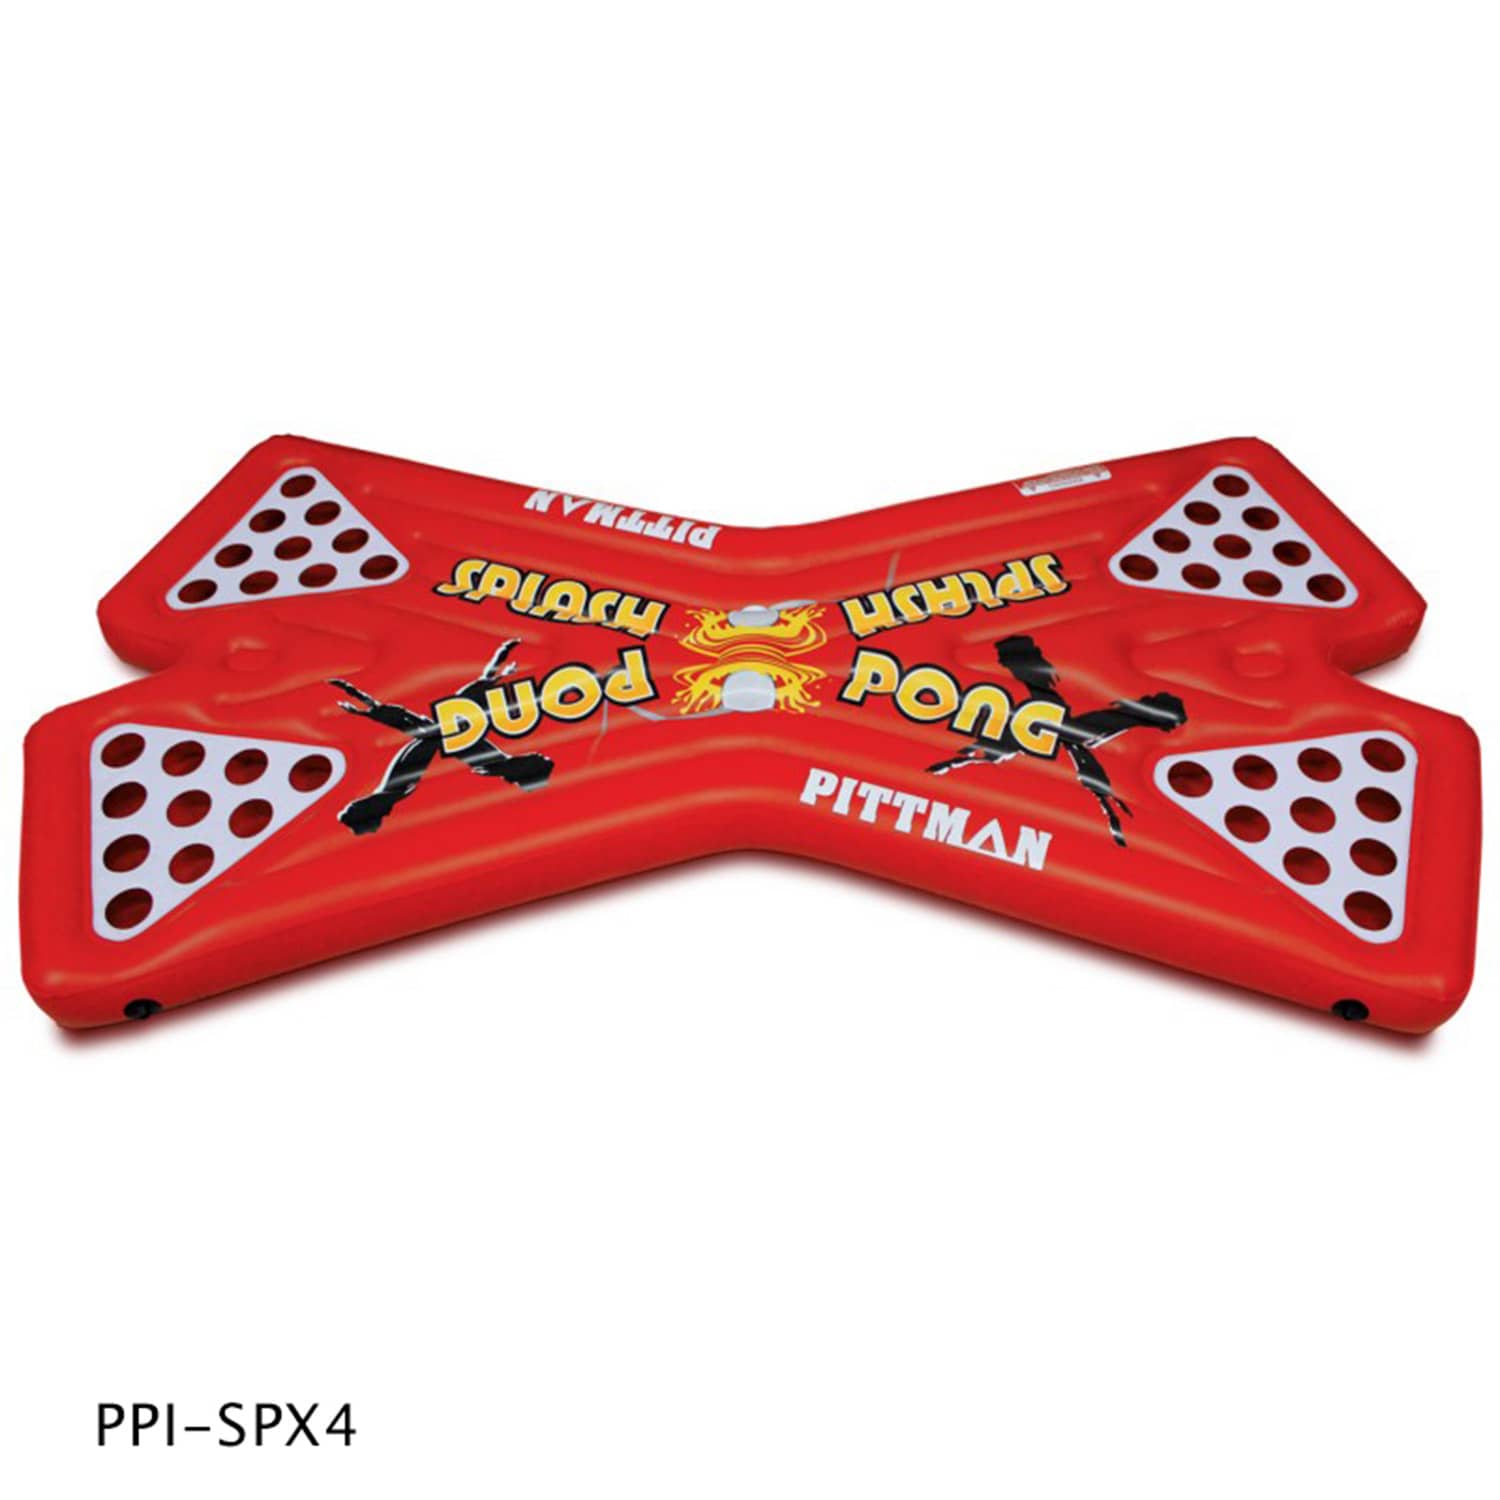 Pittman Outdoors PPI-SPX4 Splash Pong X-game